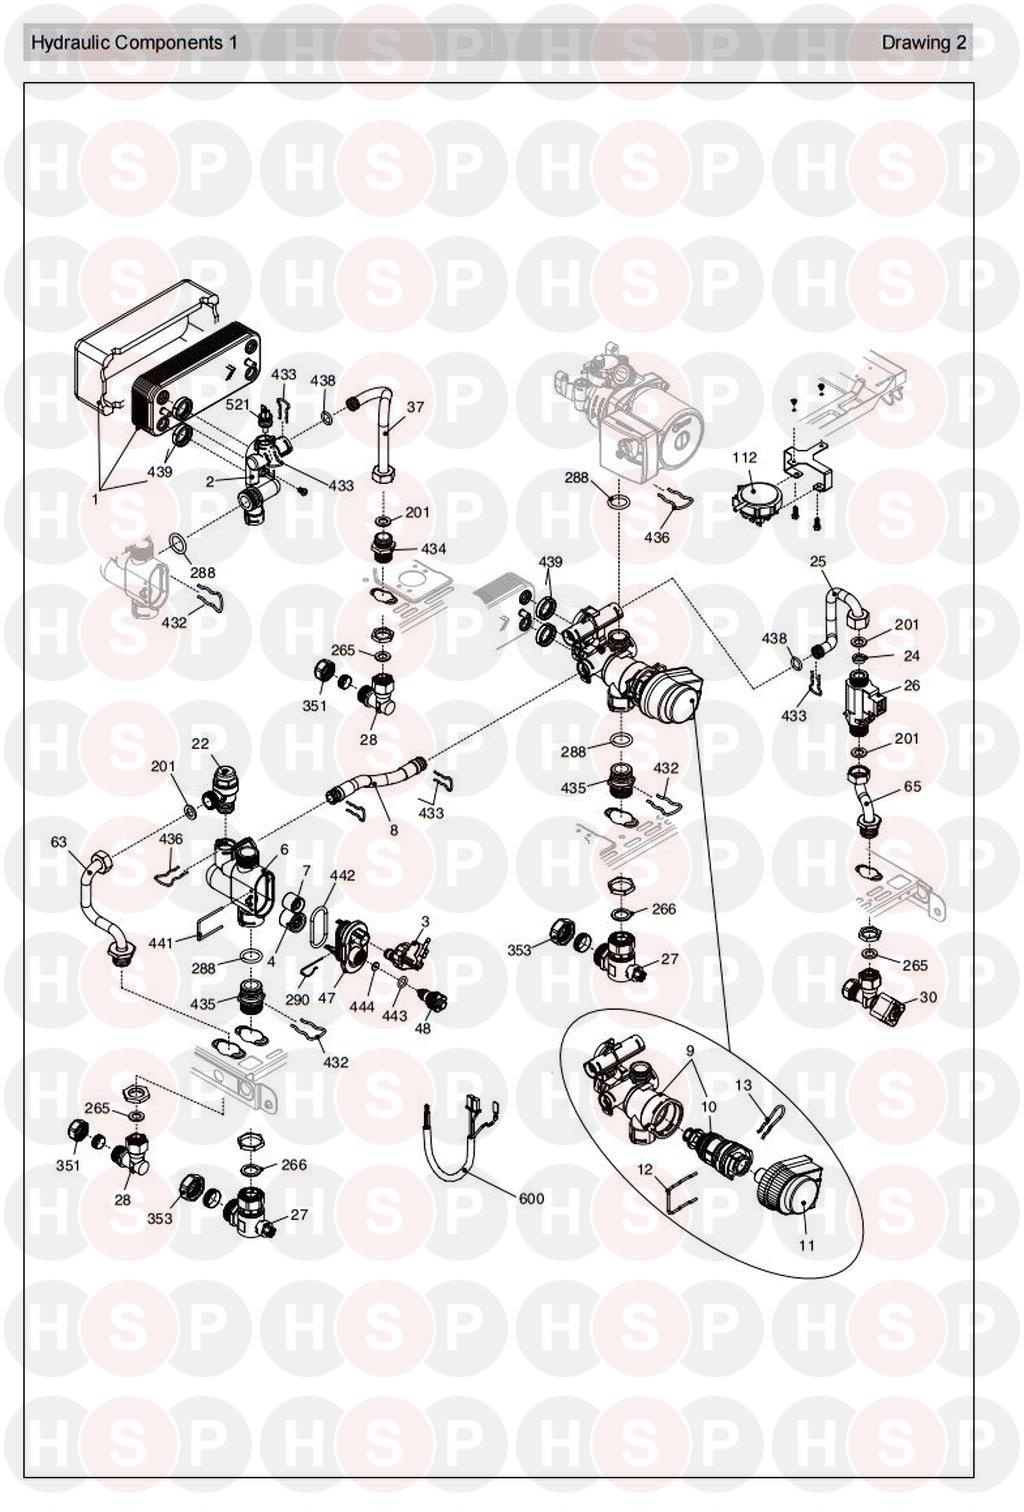 Hydraulics 1 diagram for Vokera Procombi 120HE Rev 4 (03/2010)